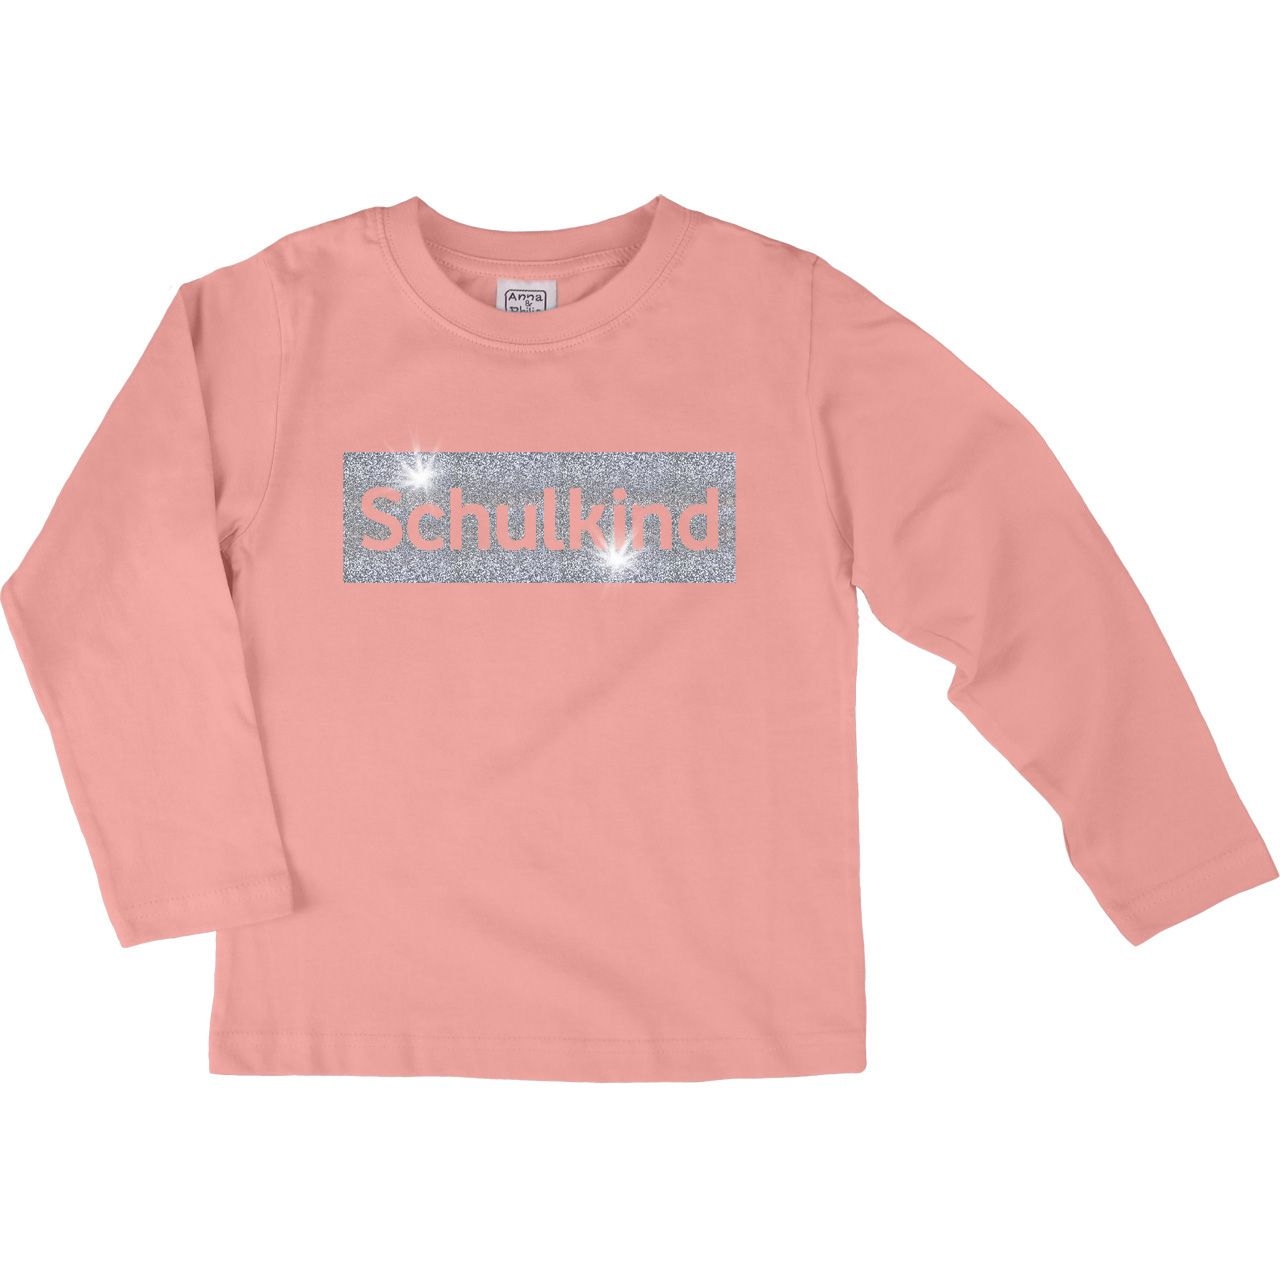 Schulkind Glitzer Kinder Langarm Shirt rosa 122 / 128